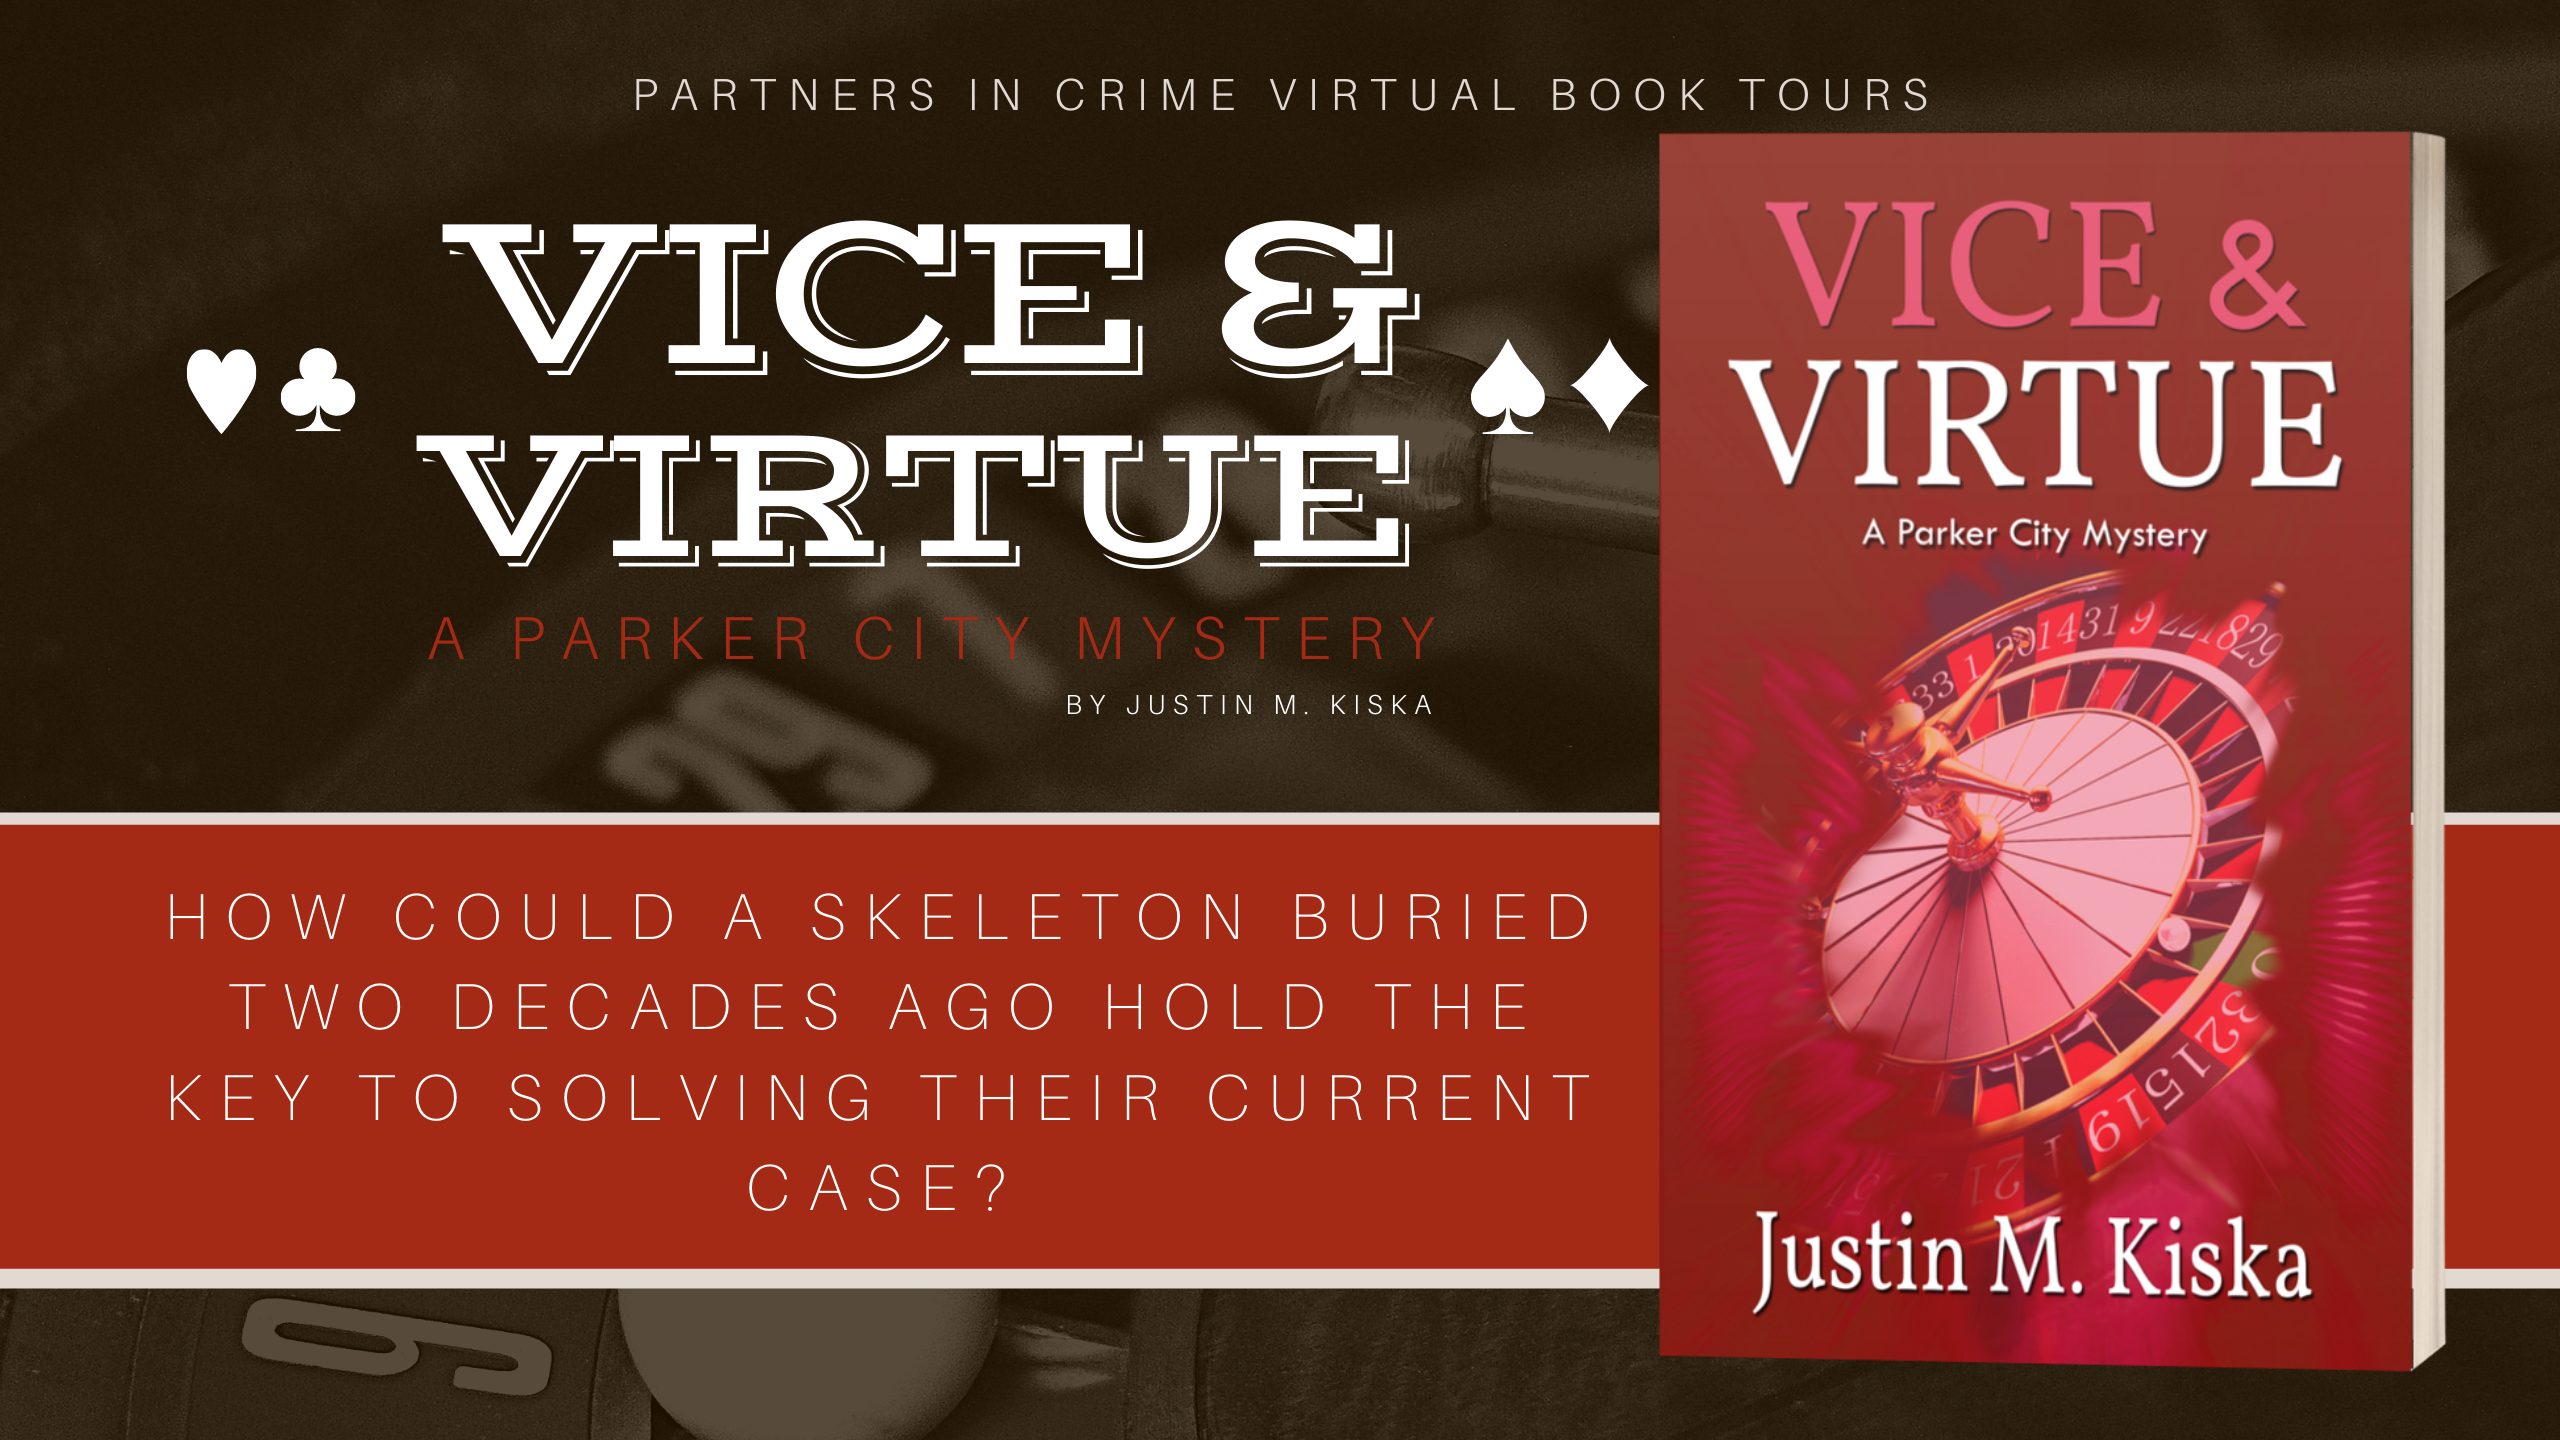 Vice & Virtue by Justin M. Kiska – Showcase